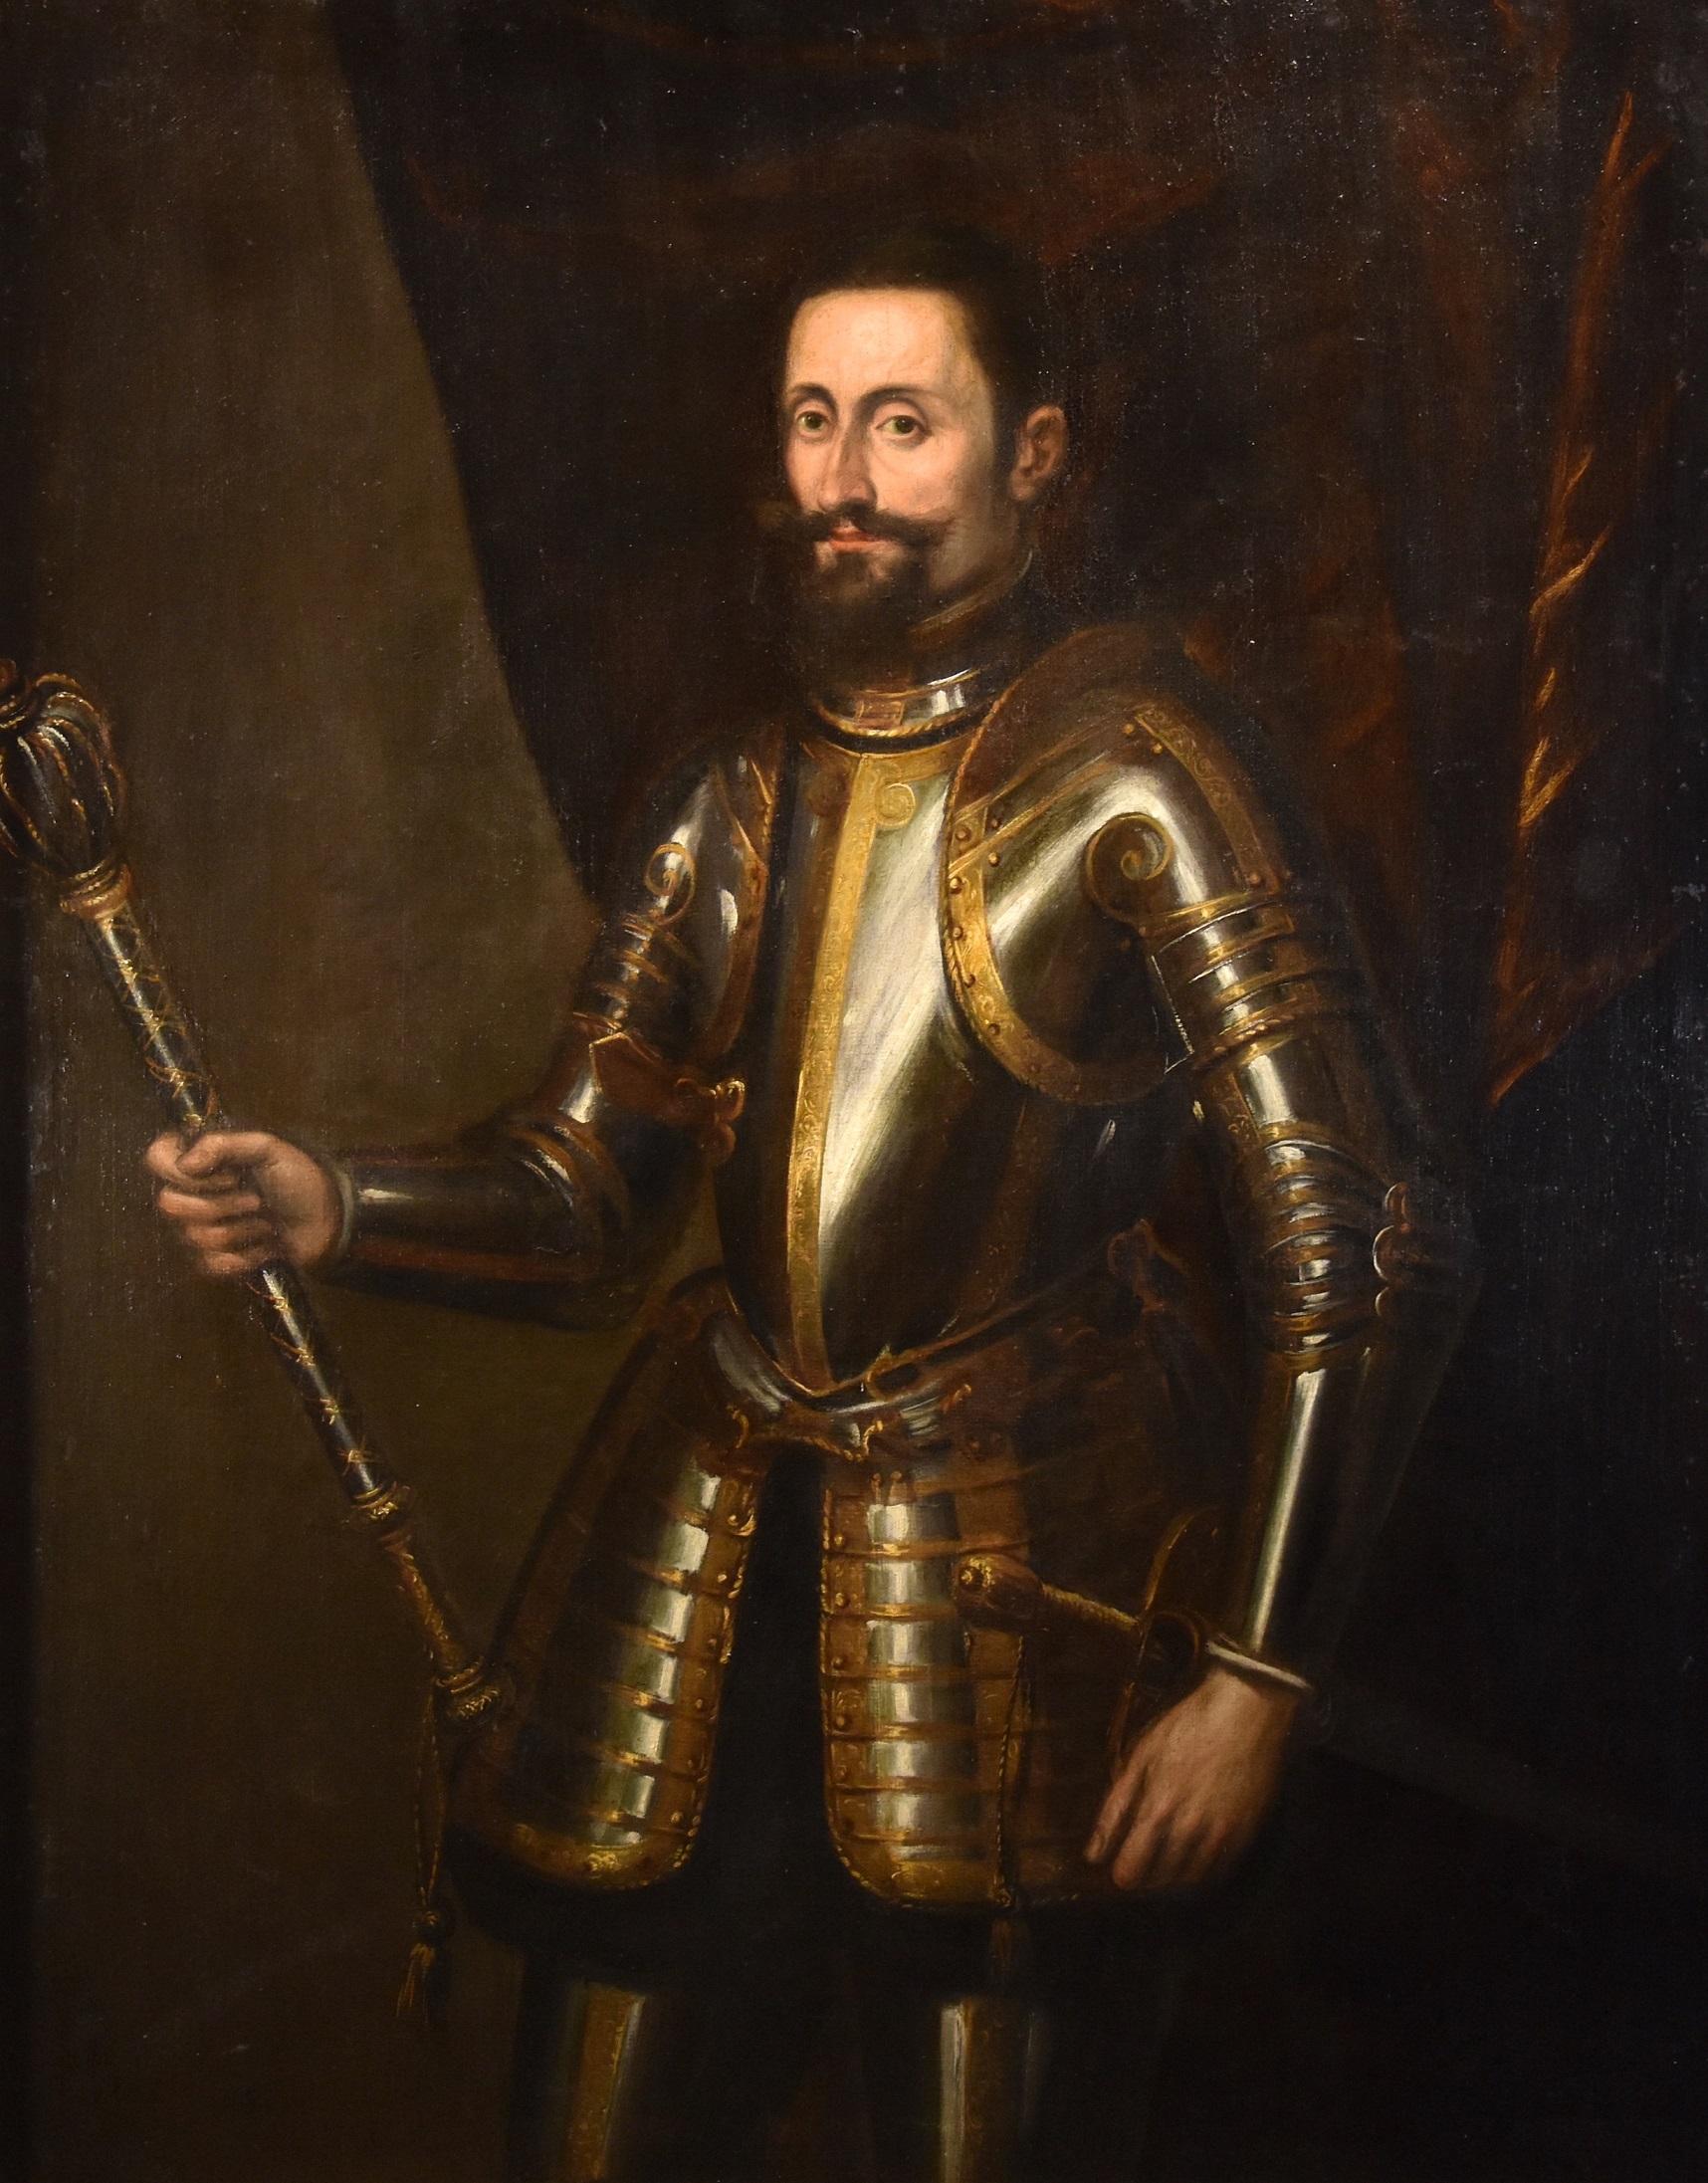 17th century knight